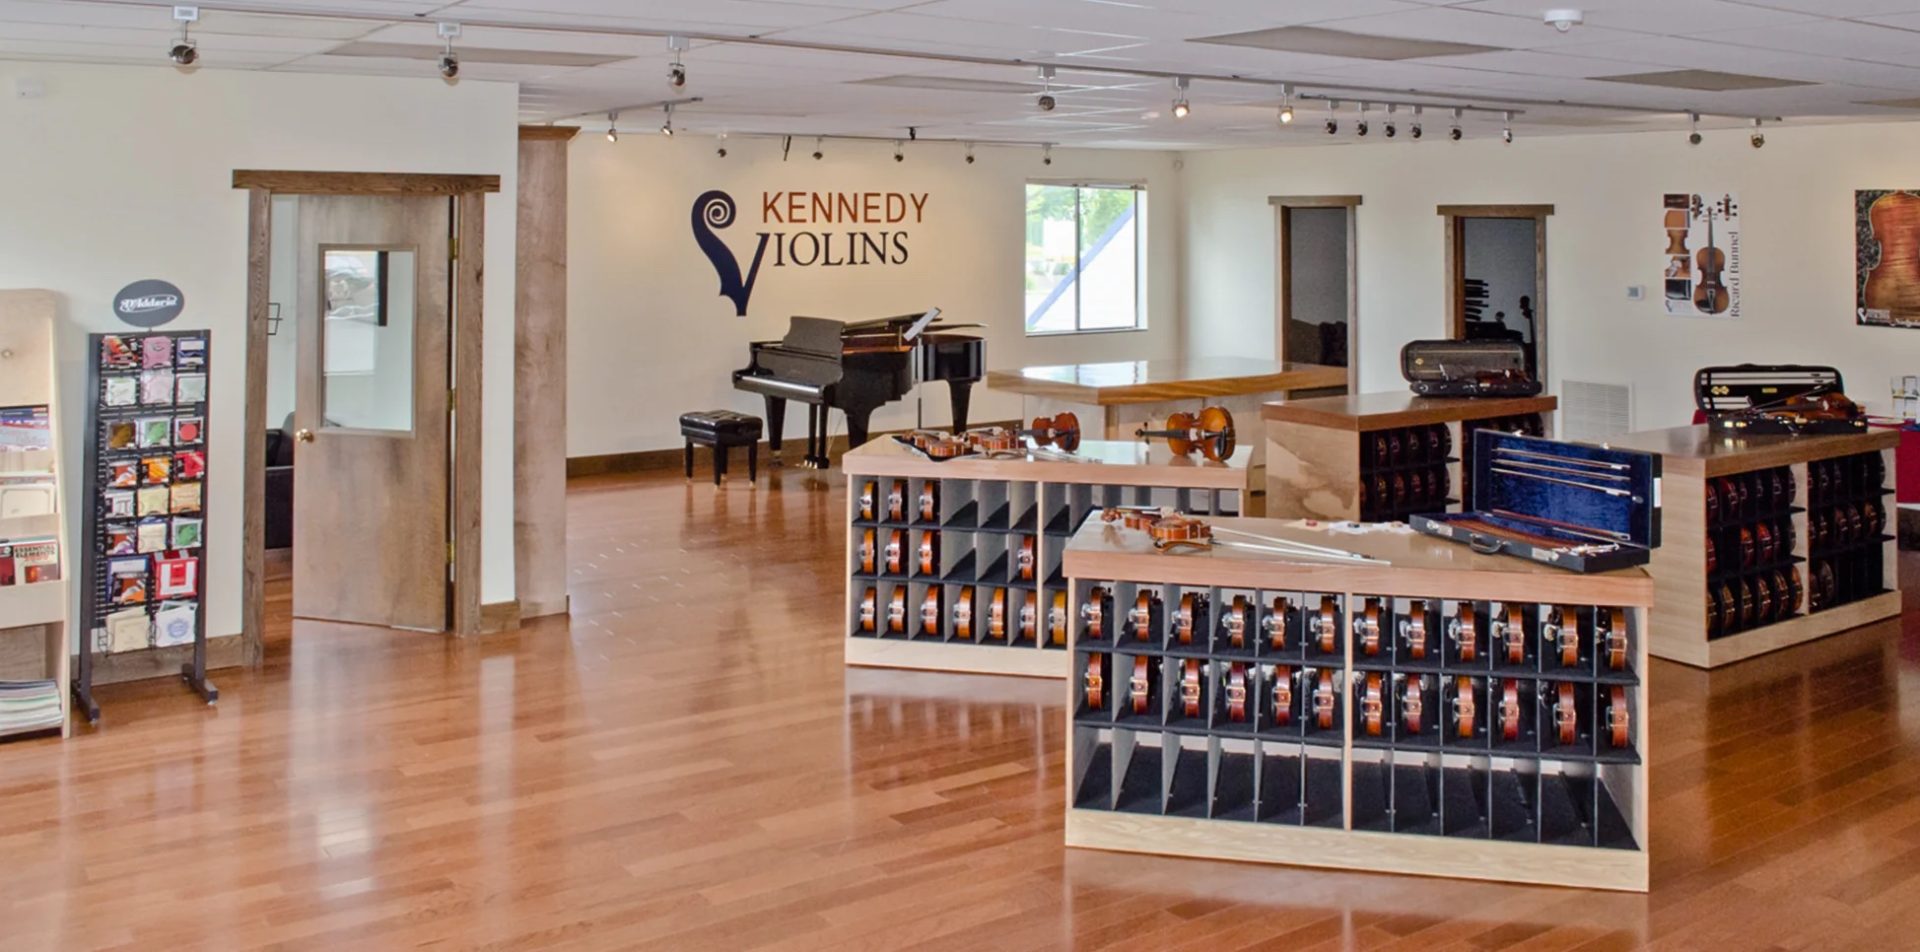 Ricard Bunnel Voted Best Beginner Violin Brand by Kennedy Violins